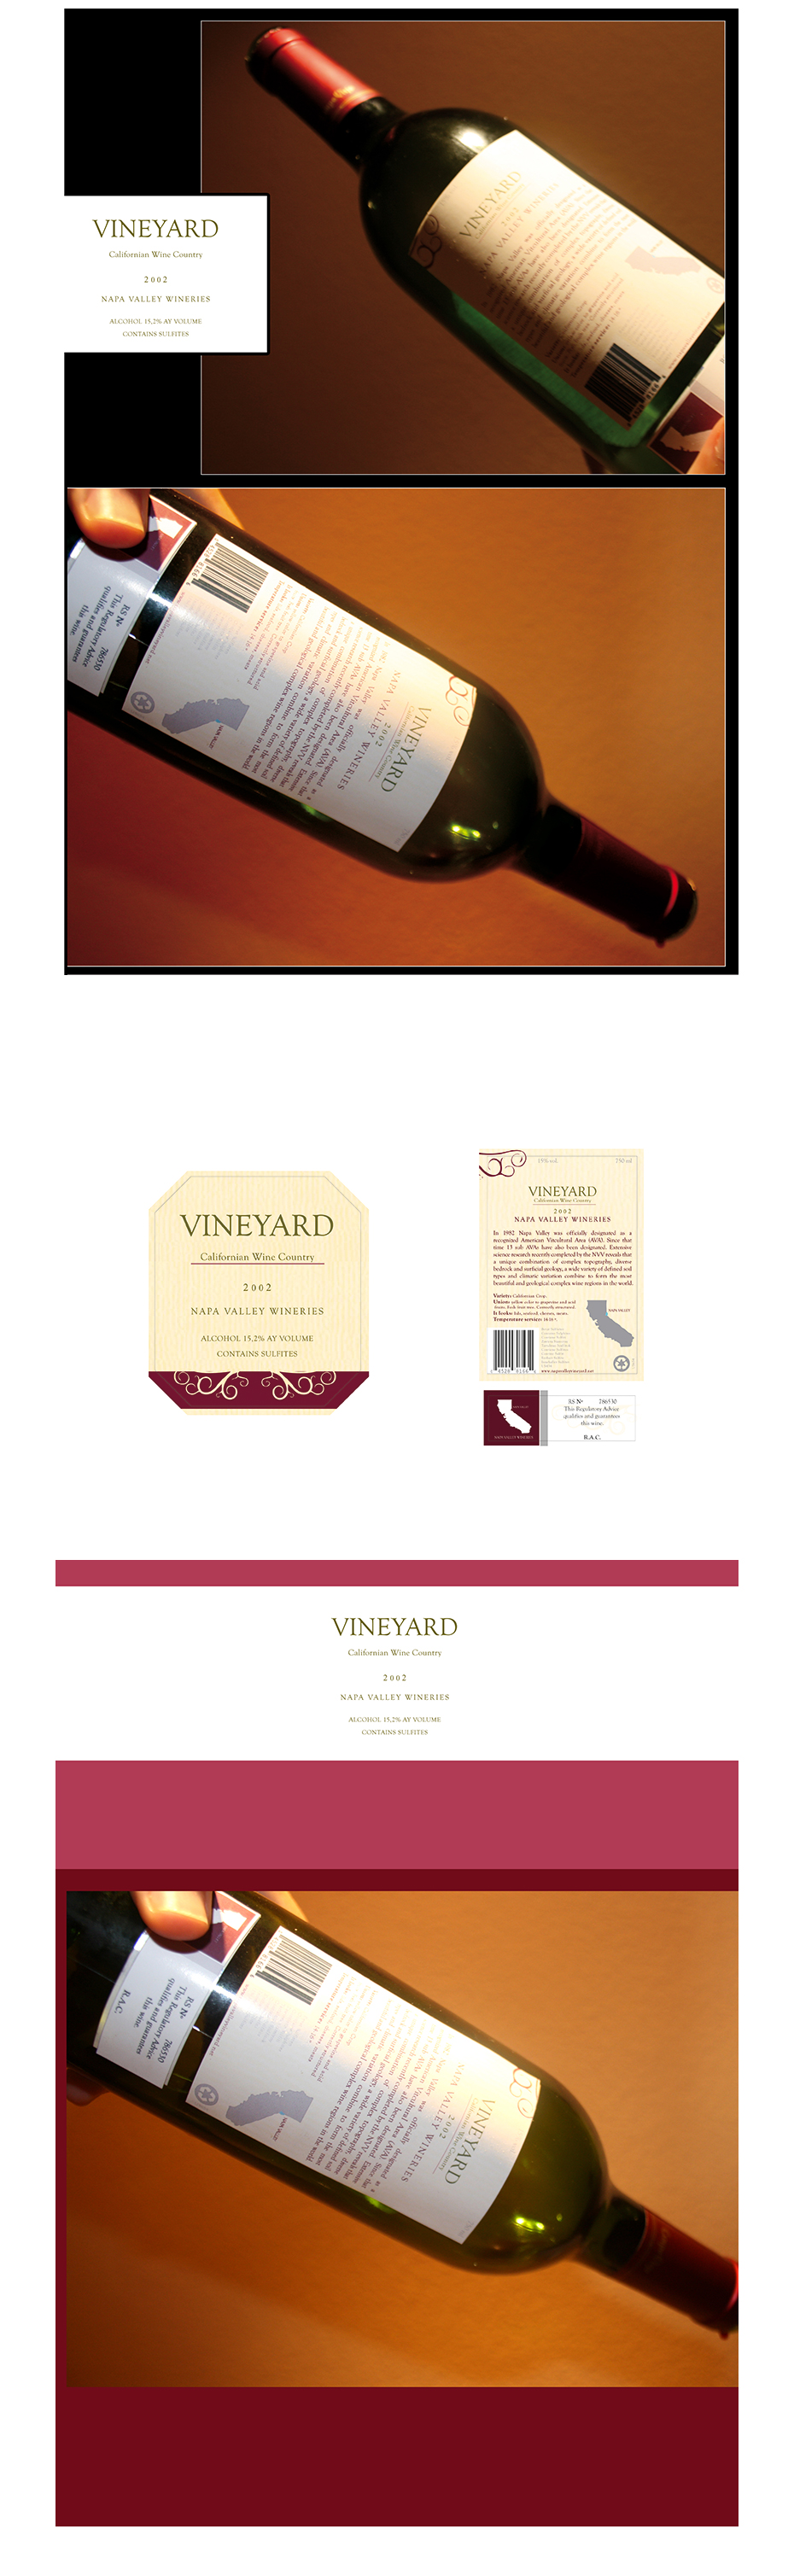 Vineyard California wines pieces